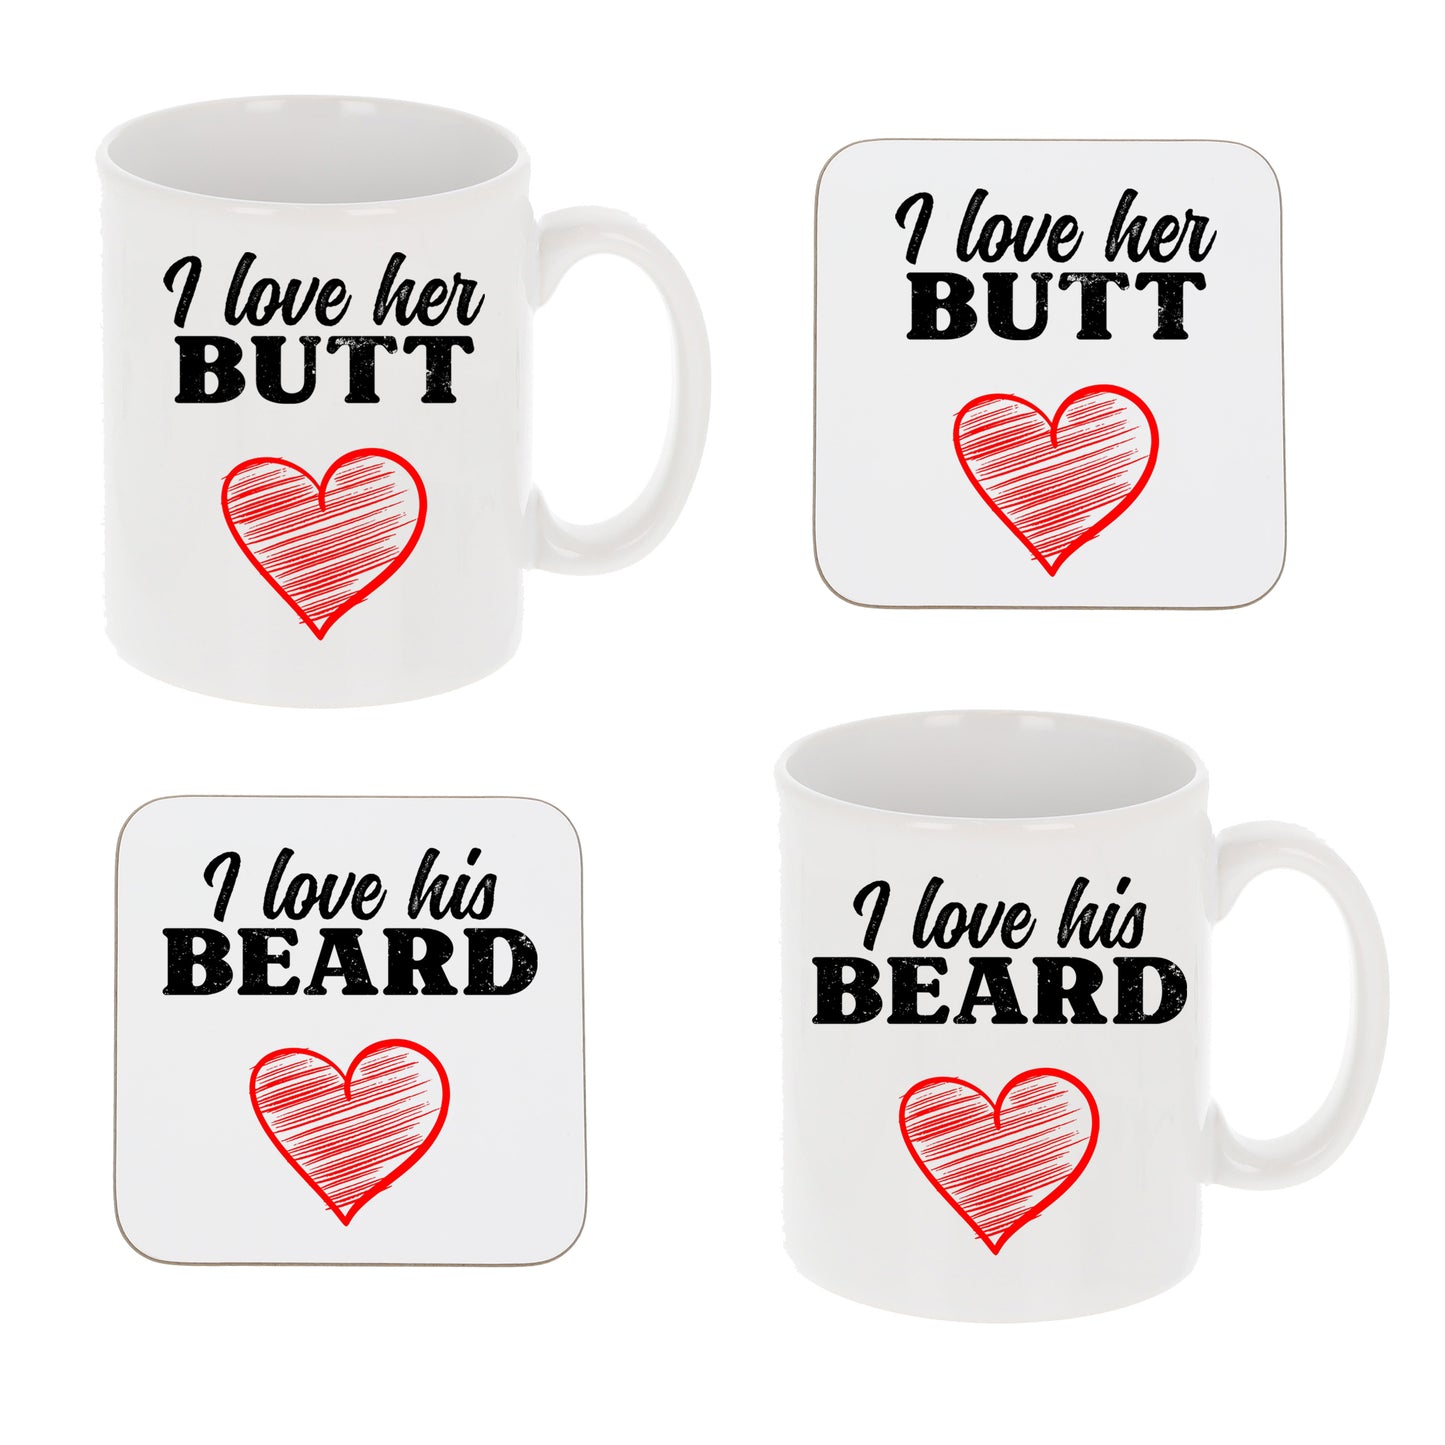 I Love His Beard / Her Butt Mug and/or Coaster Gift  - Always Looking Good - Set Of 2 Mug & Coaster Set  